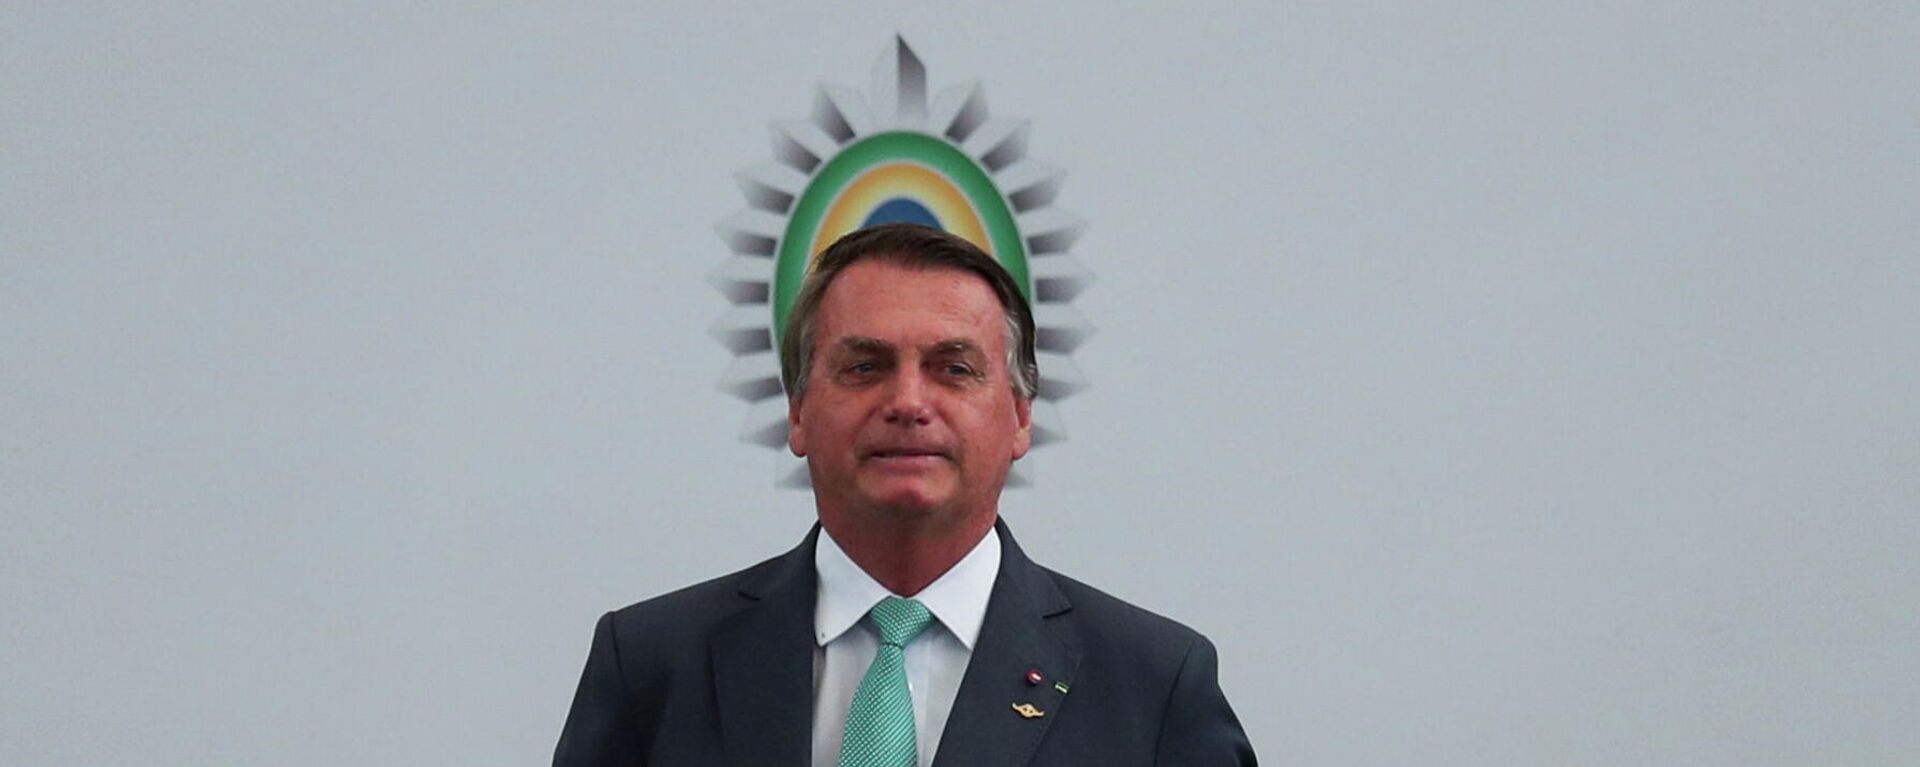 Jair Bolsonaro, presidente de Brasil - Sputnik Mundo, 1920, 10.09.2021